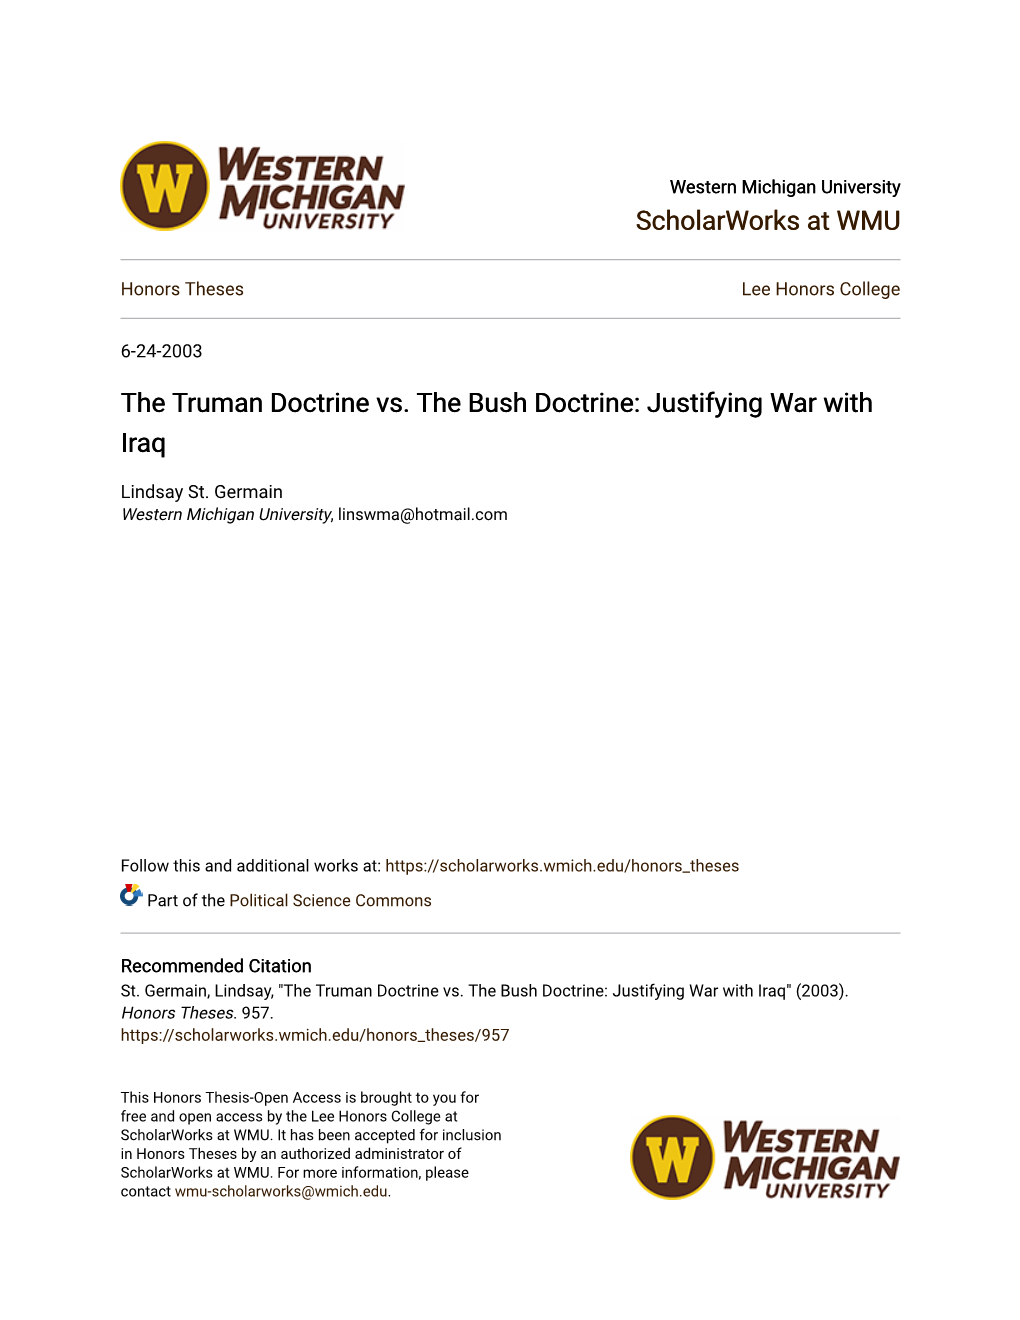 The Truman Doctrine Vs. the Bush Doctrine: Justifying War with Iraq